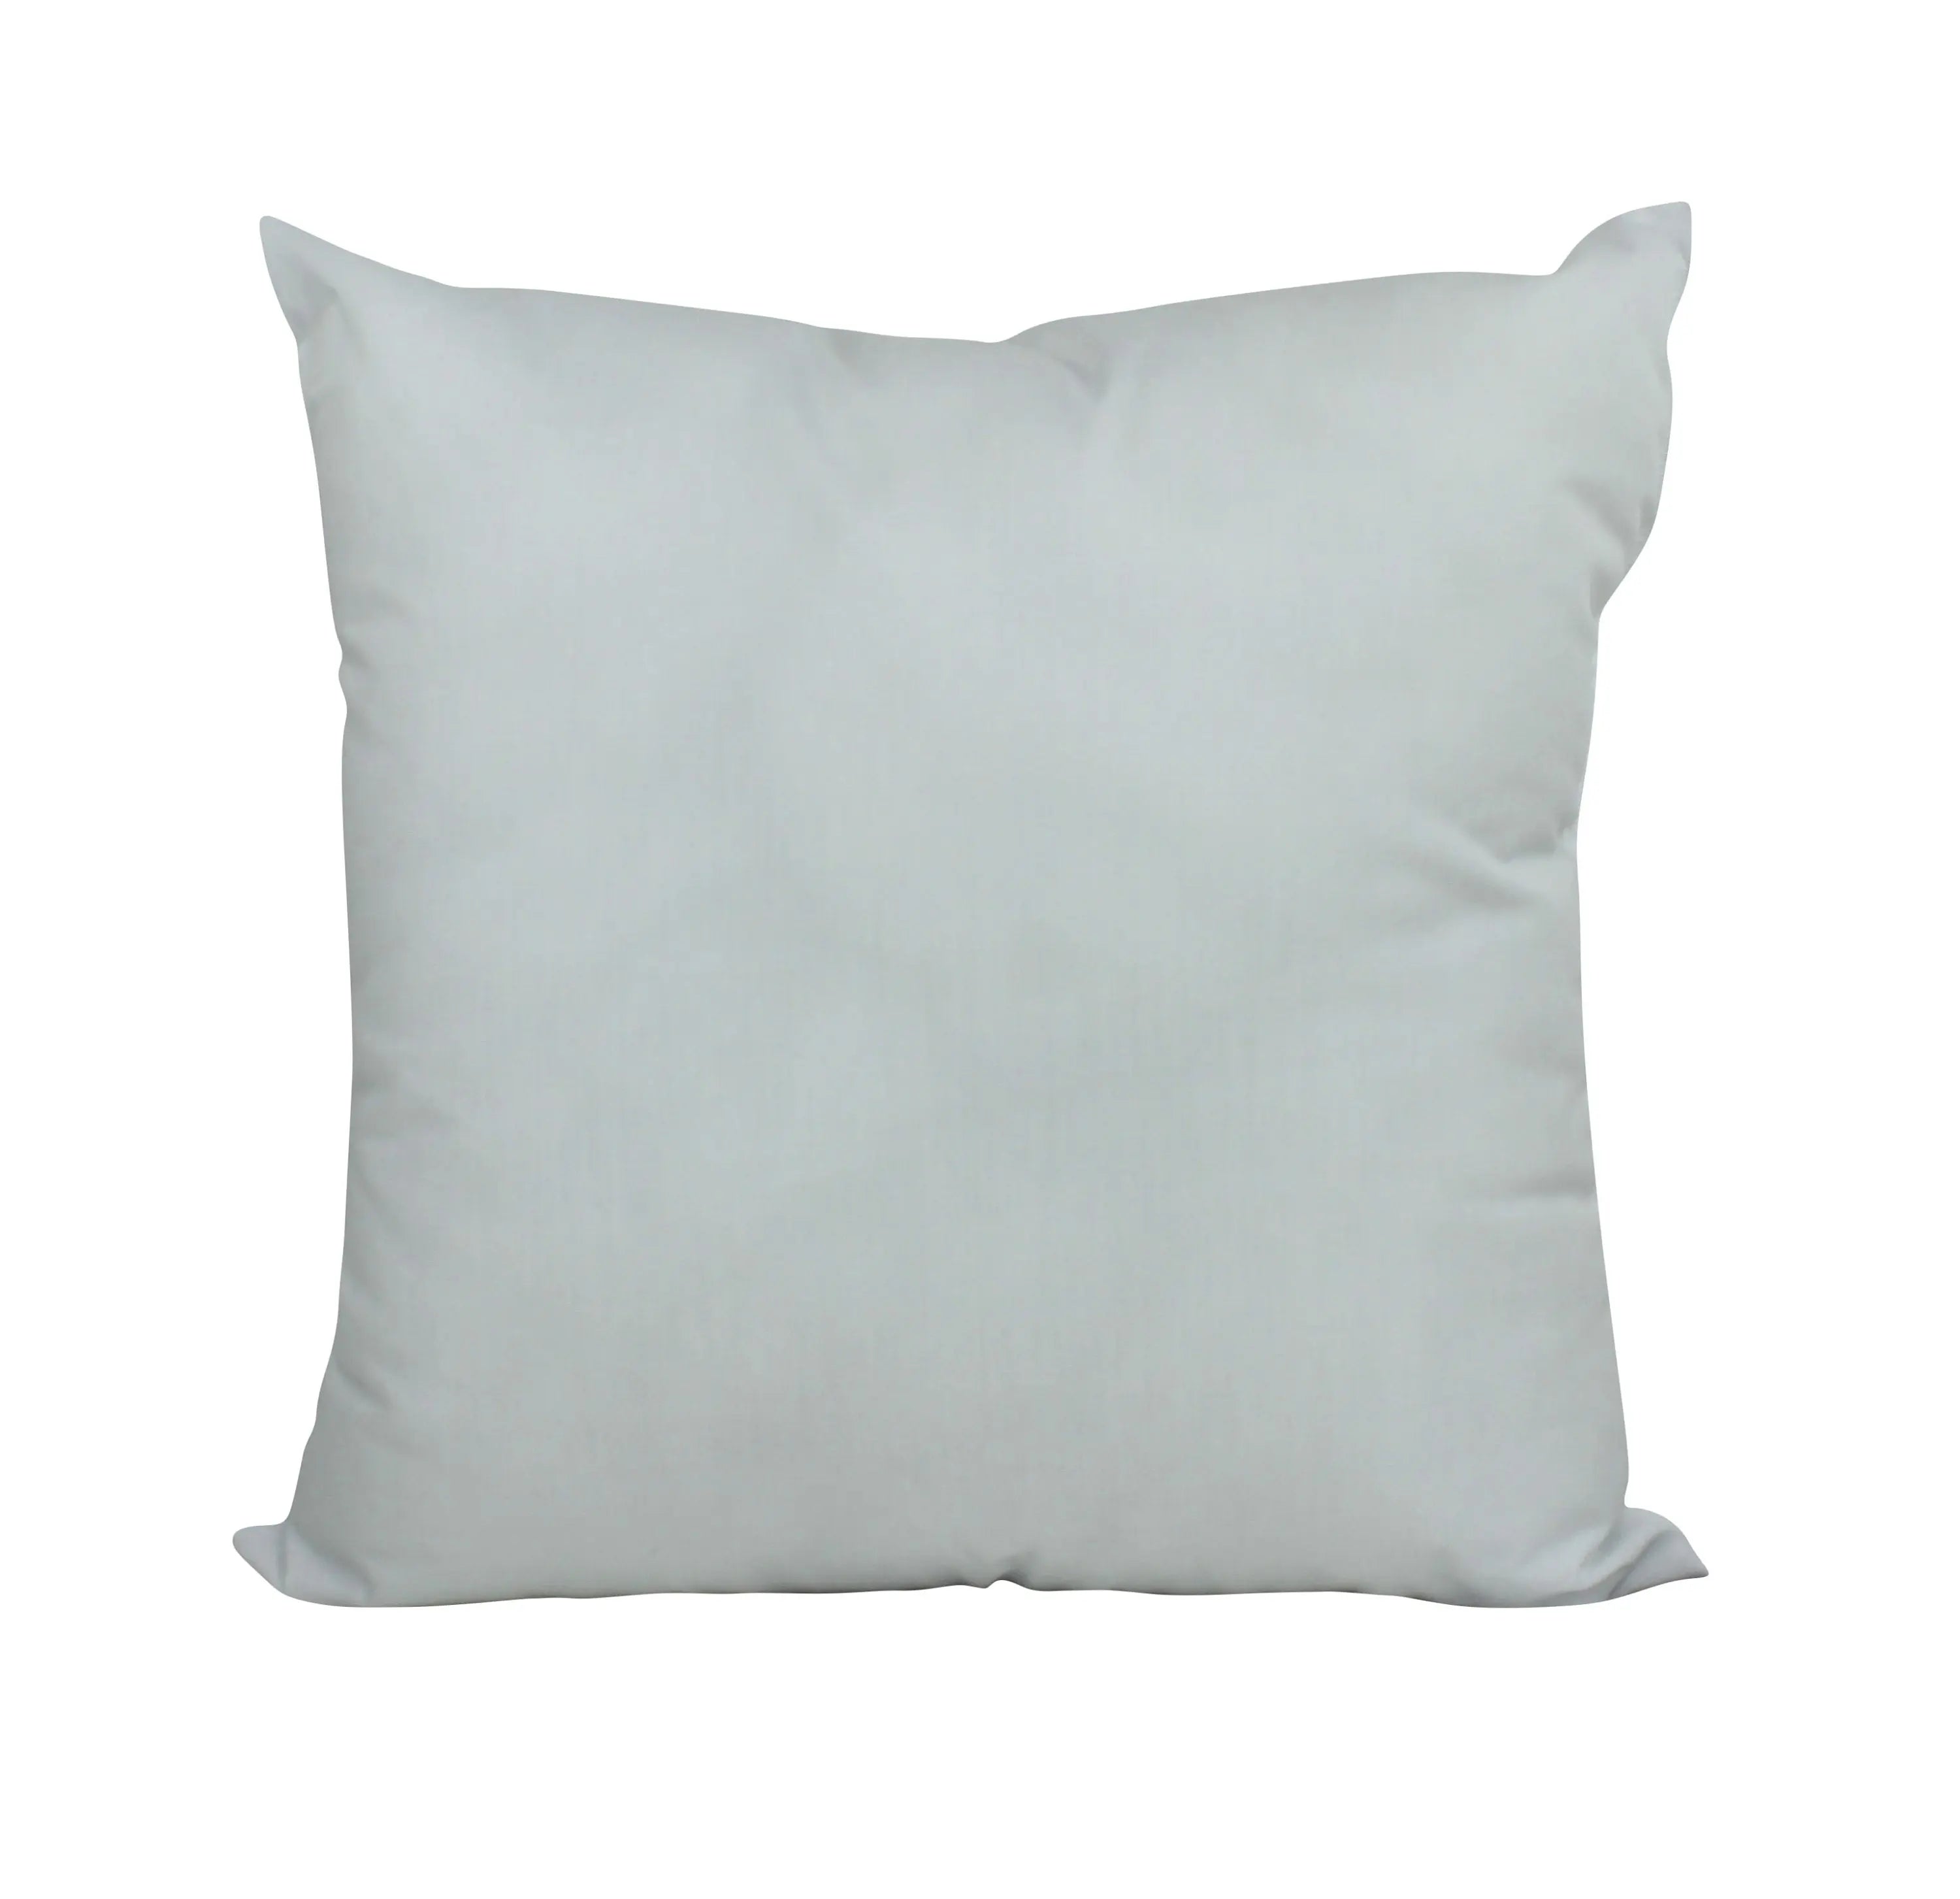 Hypoallergenic Throw Pillow Insert Stuffers (White, 18 x 18 Inches